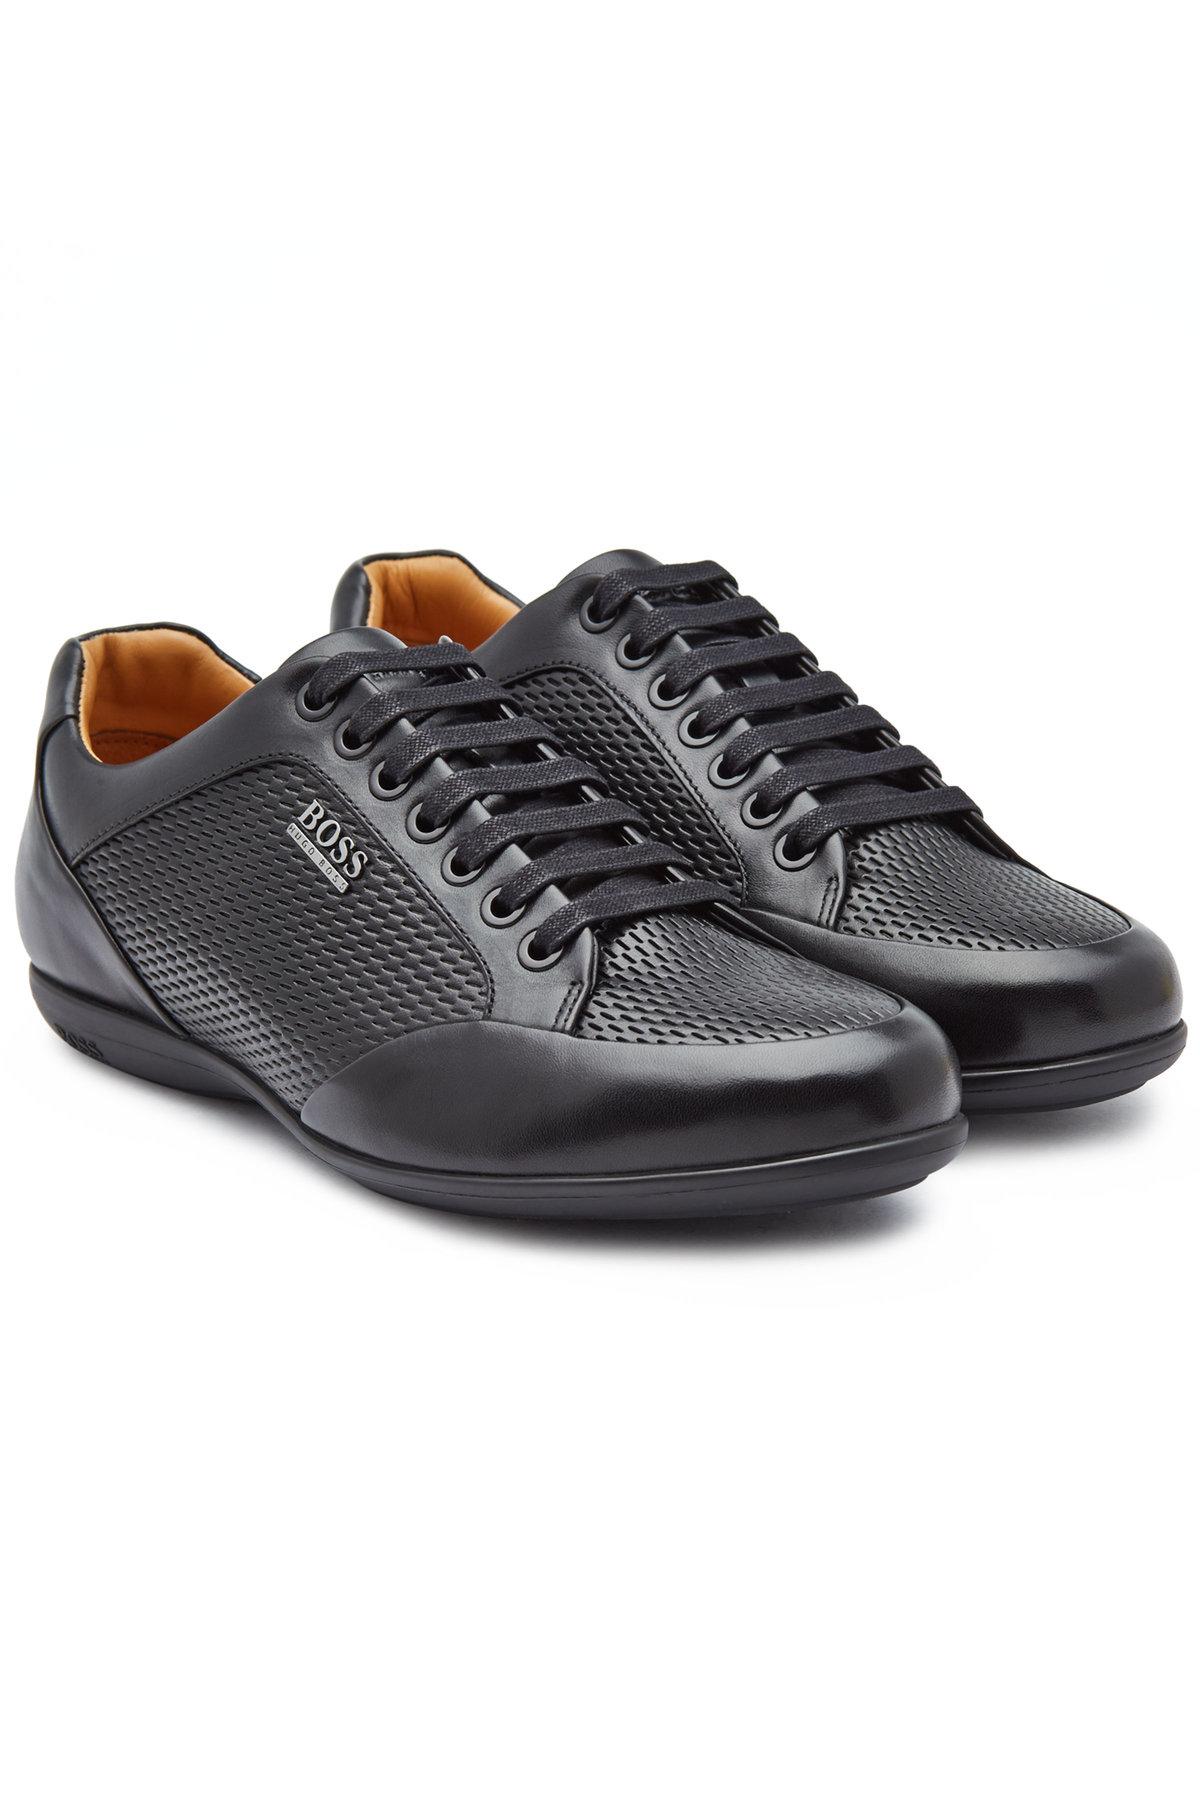 Hugo Boss Primacy Leather Sneakers In 